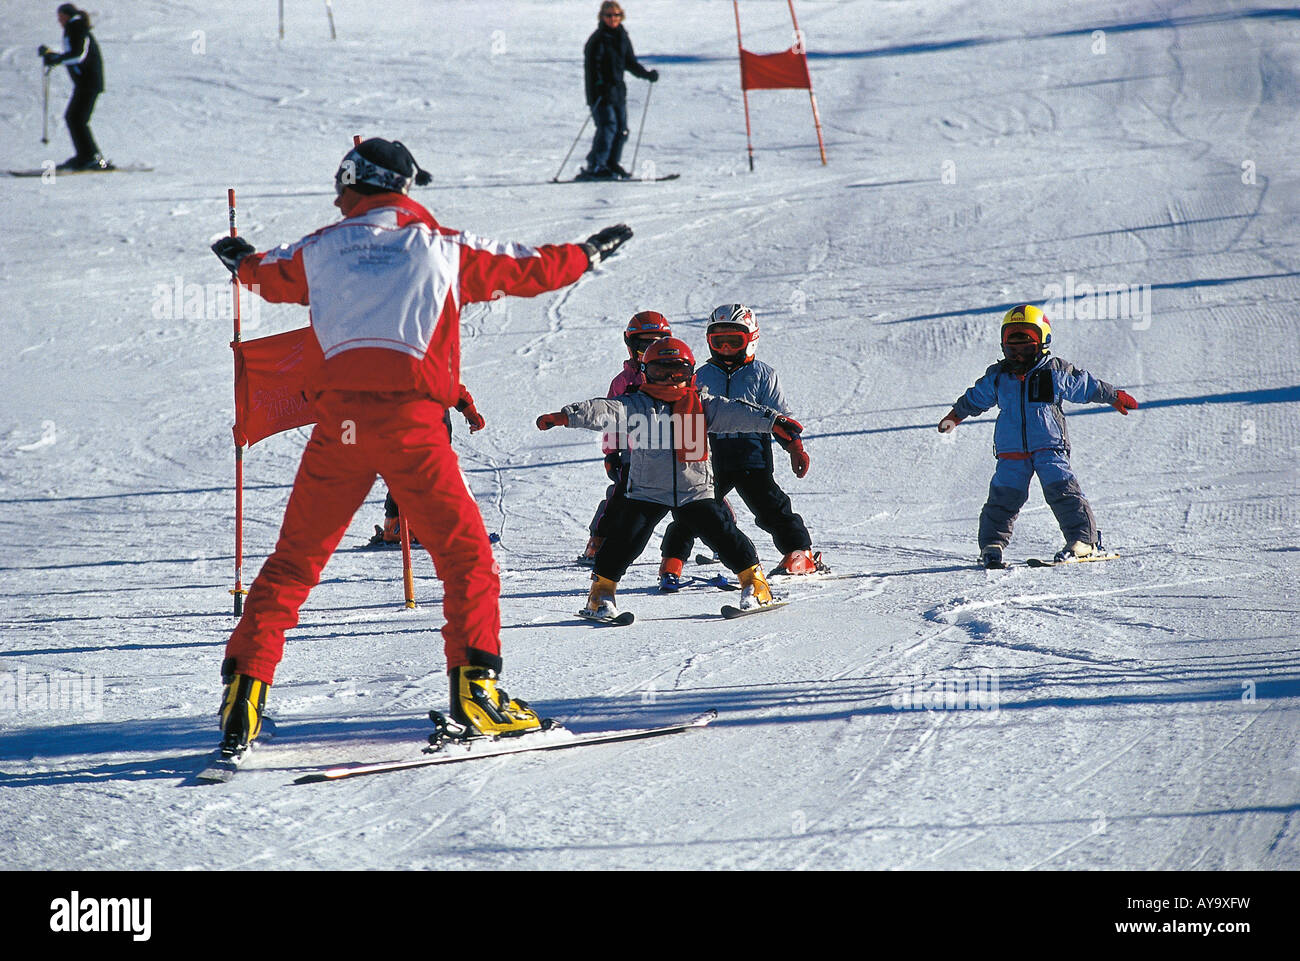 Childrens skiing lesson in Sud Tirol ski resort, Italy Stock Photo